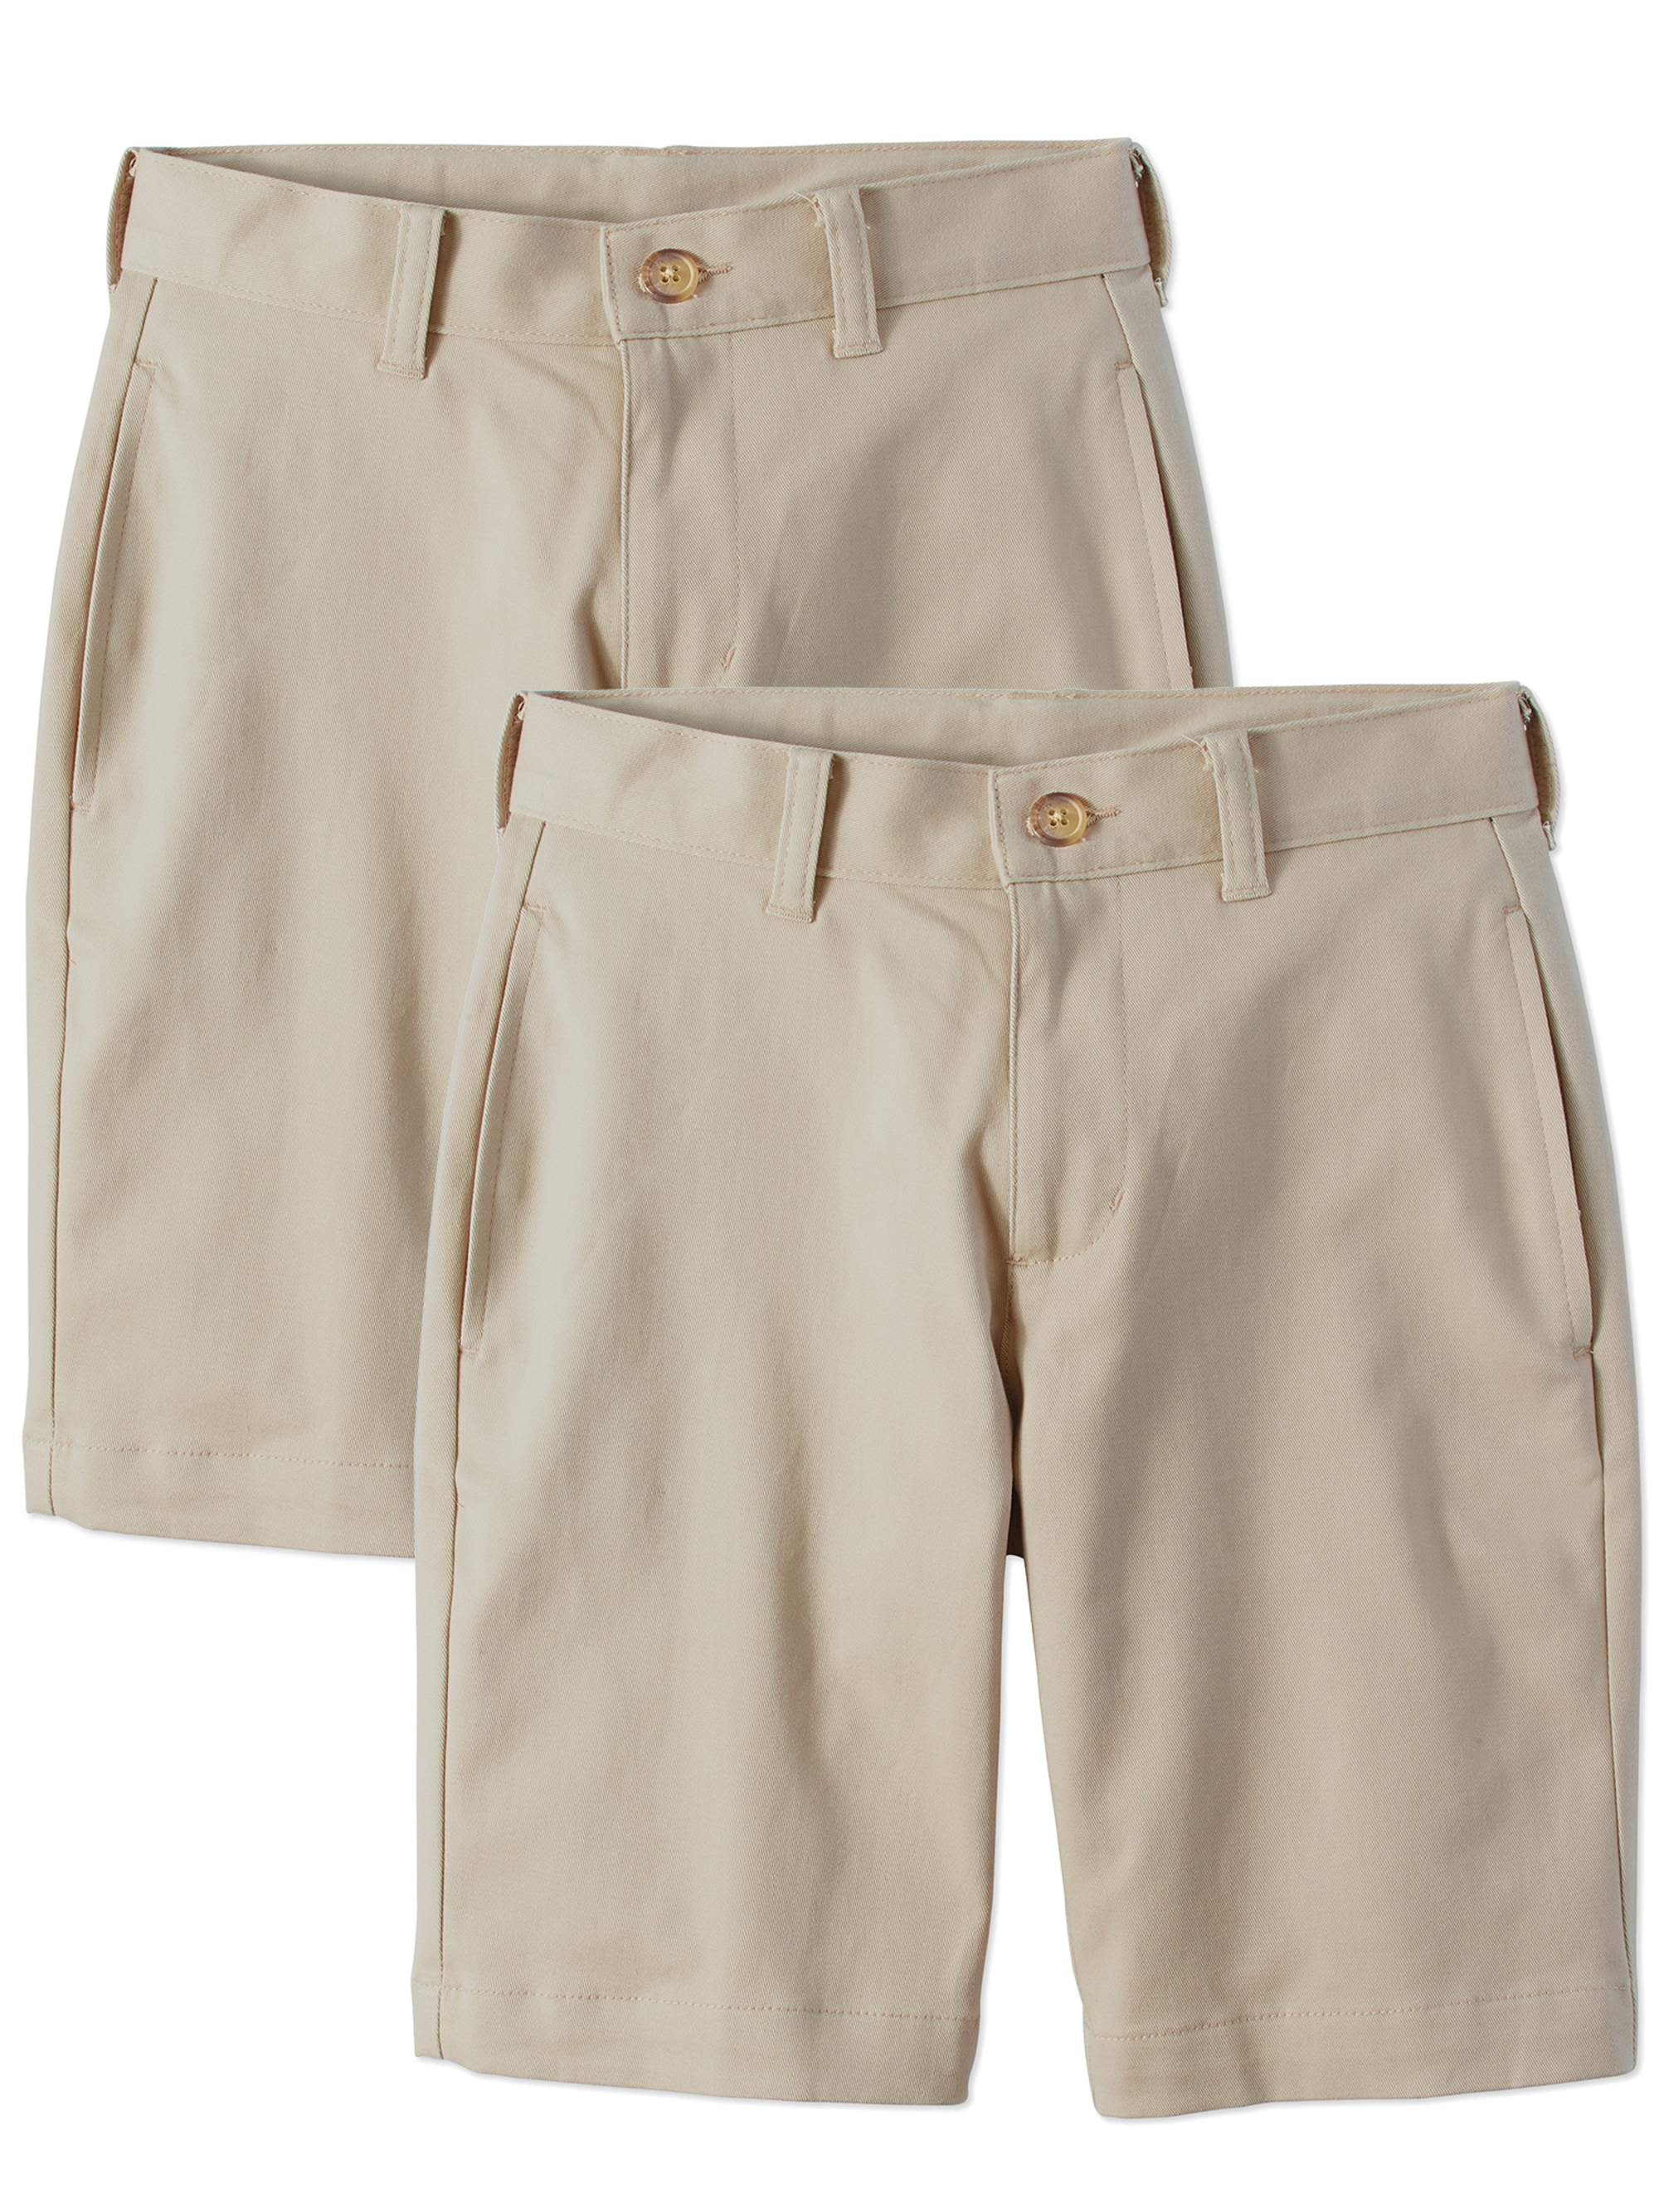 2 Sizes Young Boys Micros /"Termino/" Walk//Board Shorts NEW Casual Child Shorts